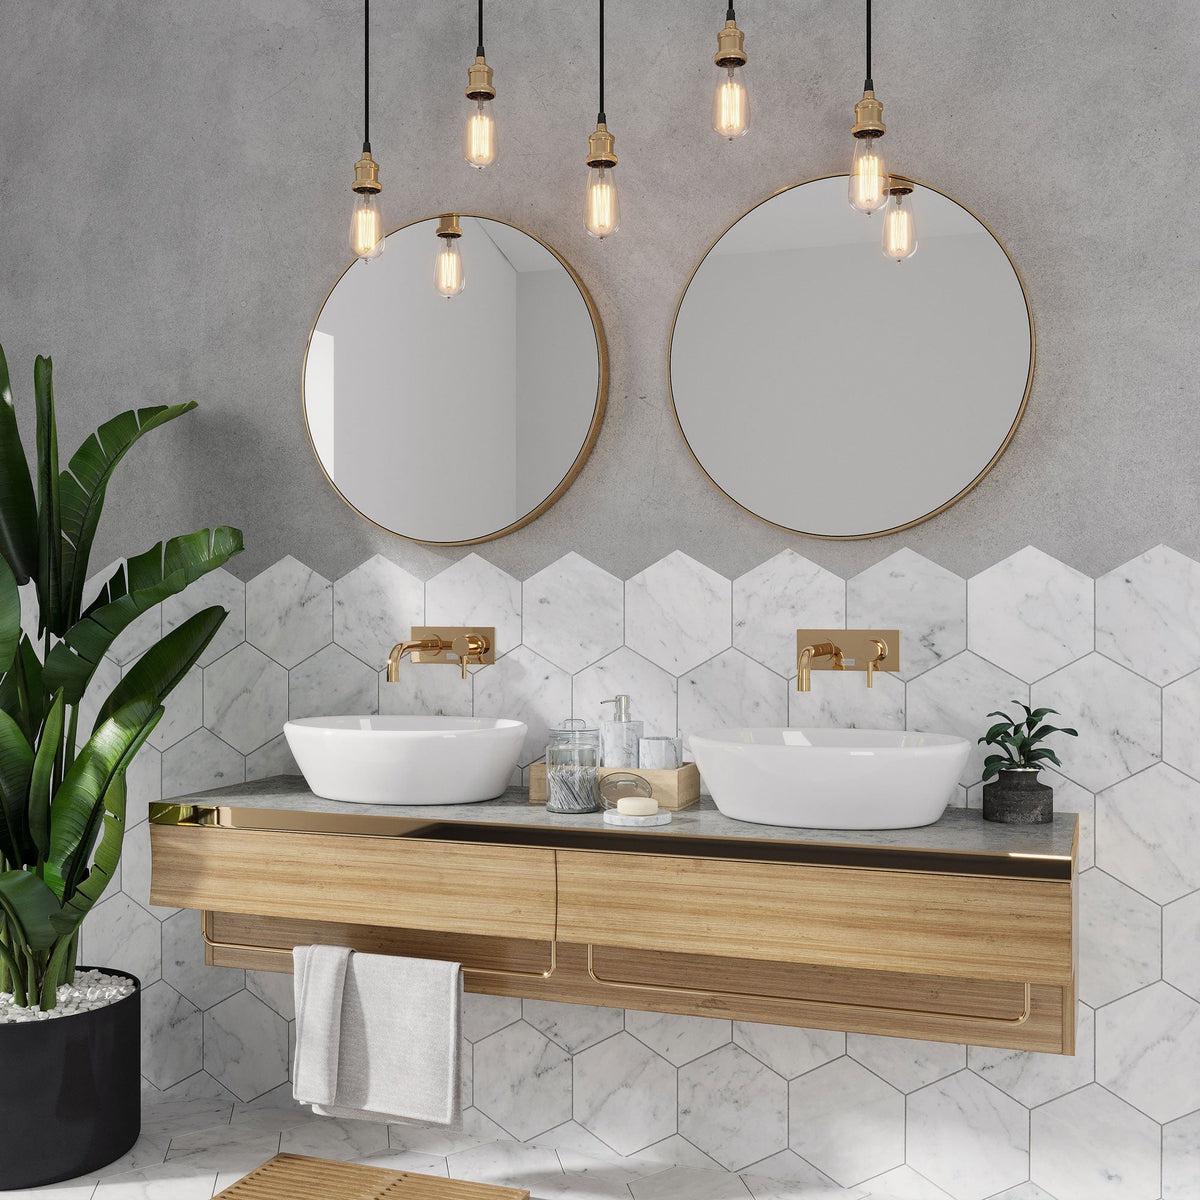 Rustic modern bathroom with white hexagon tiled wall backsplash